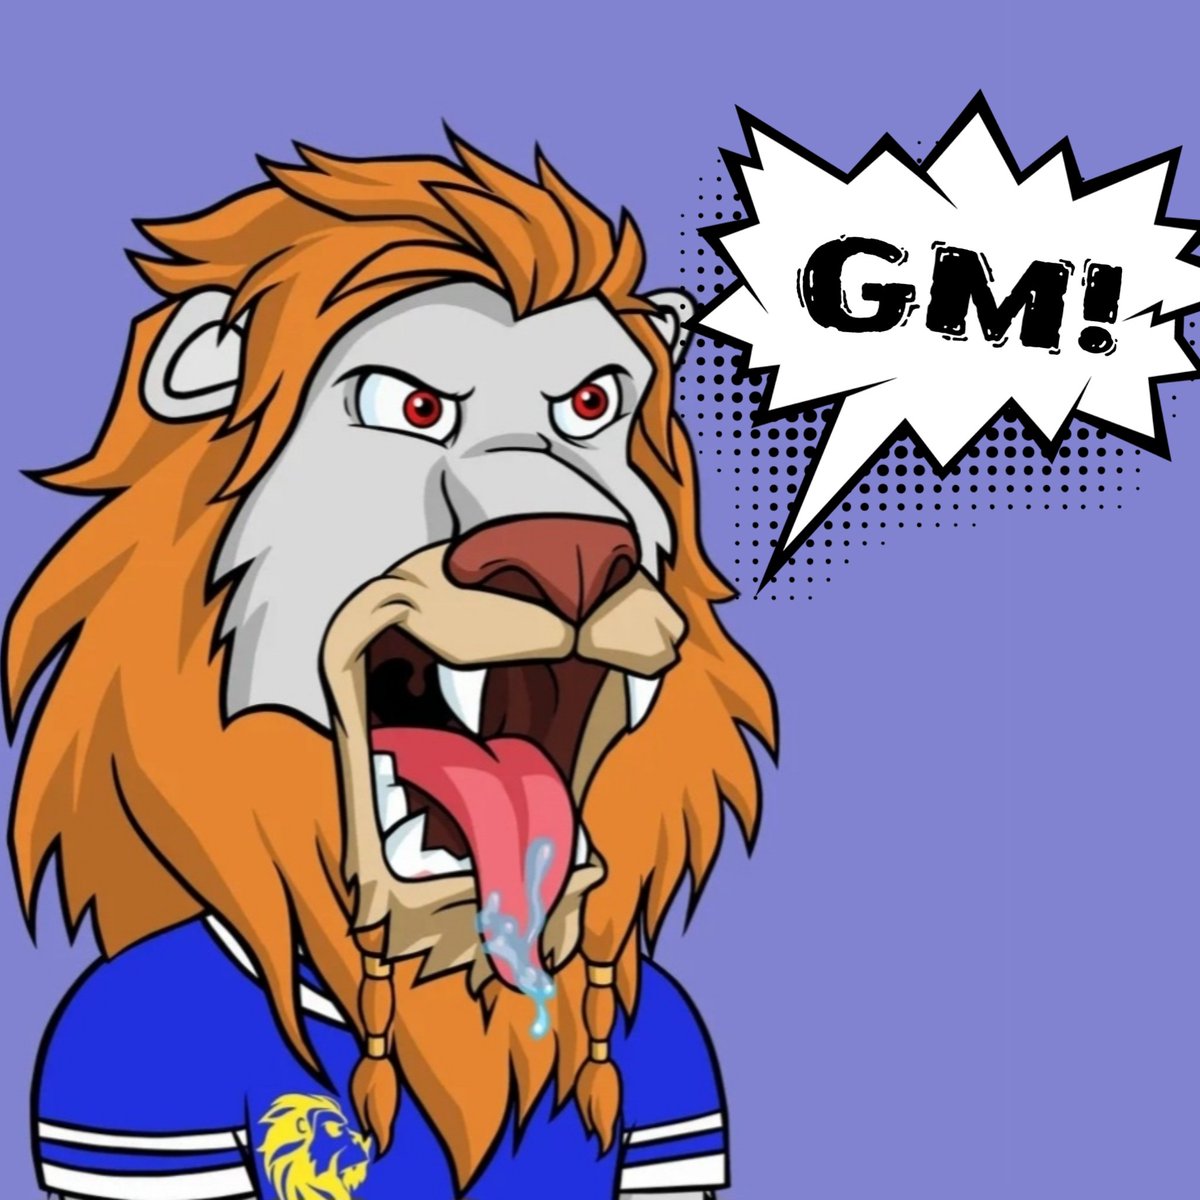 GM King and Queens!

#ROAR #RoarTogether #Lionsfollowlions @LazyLionsNFT #LazyLions